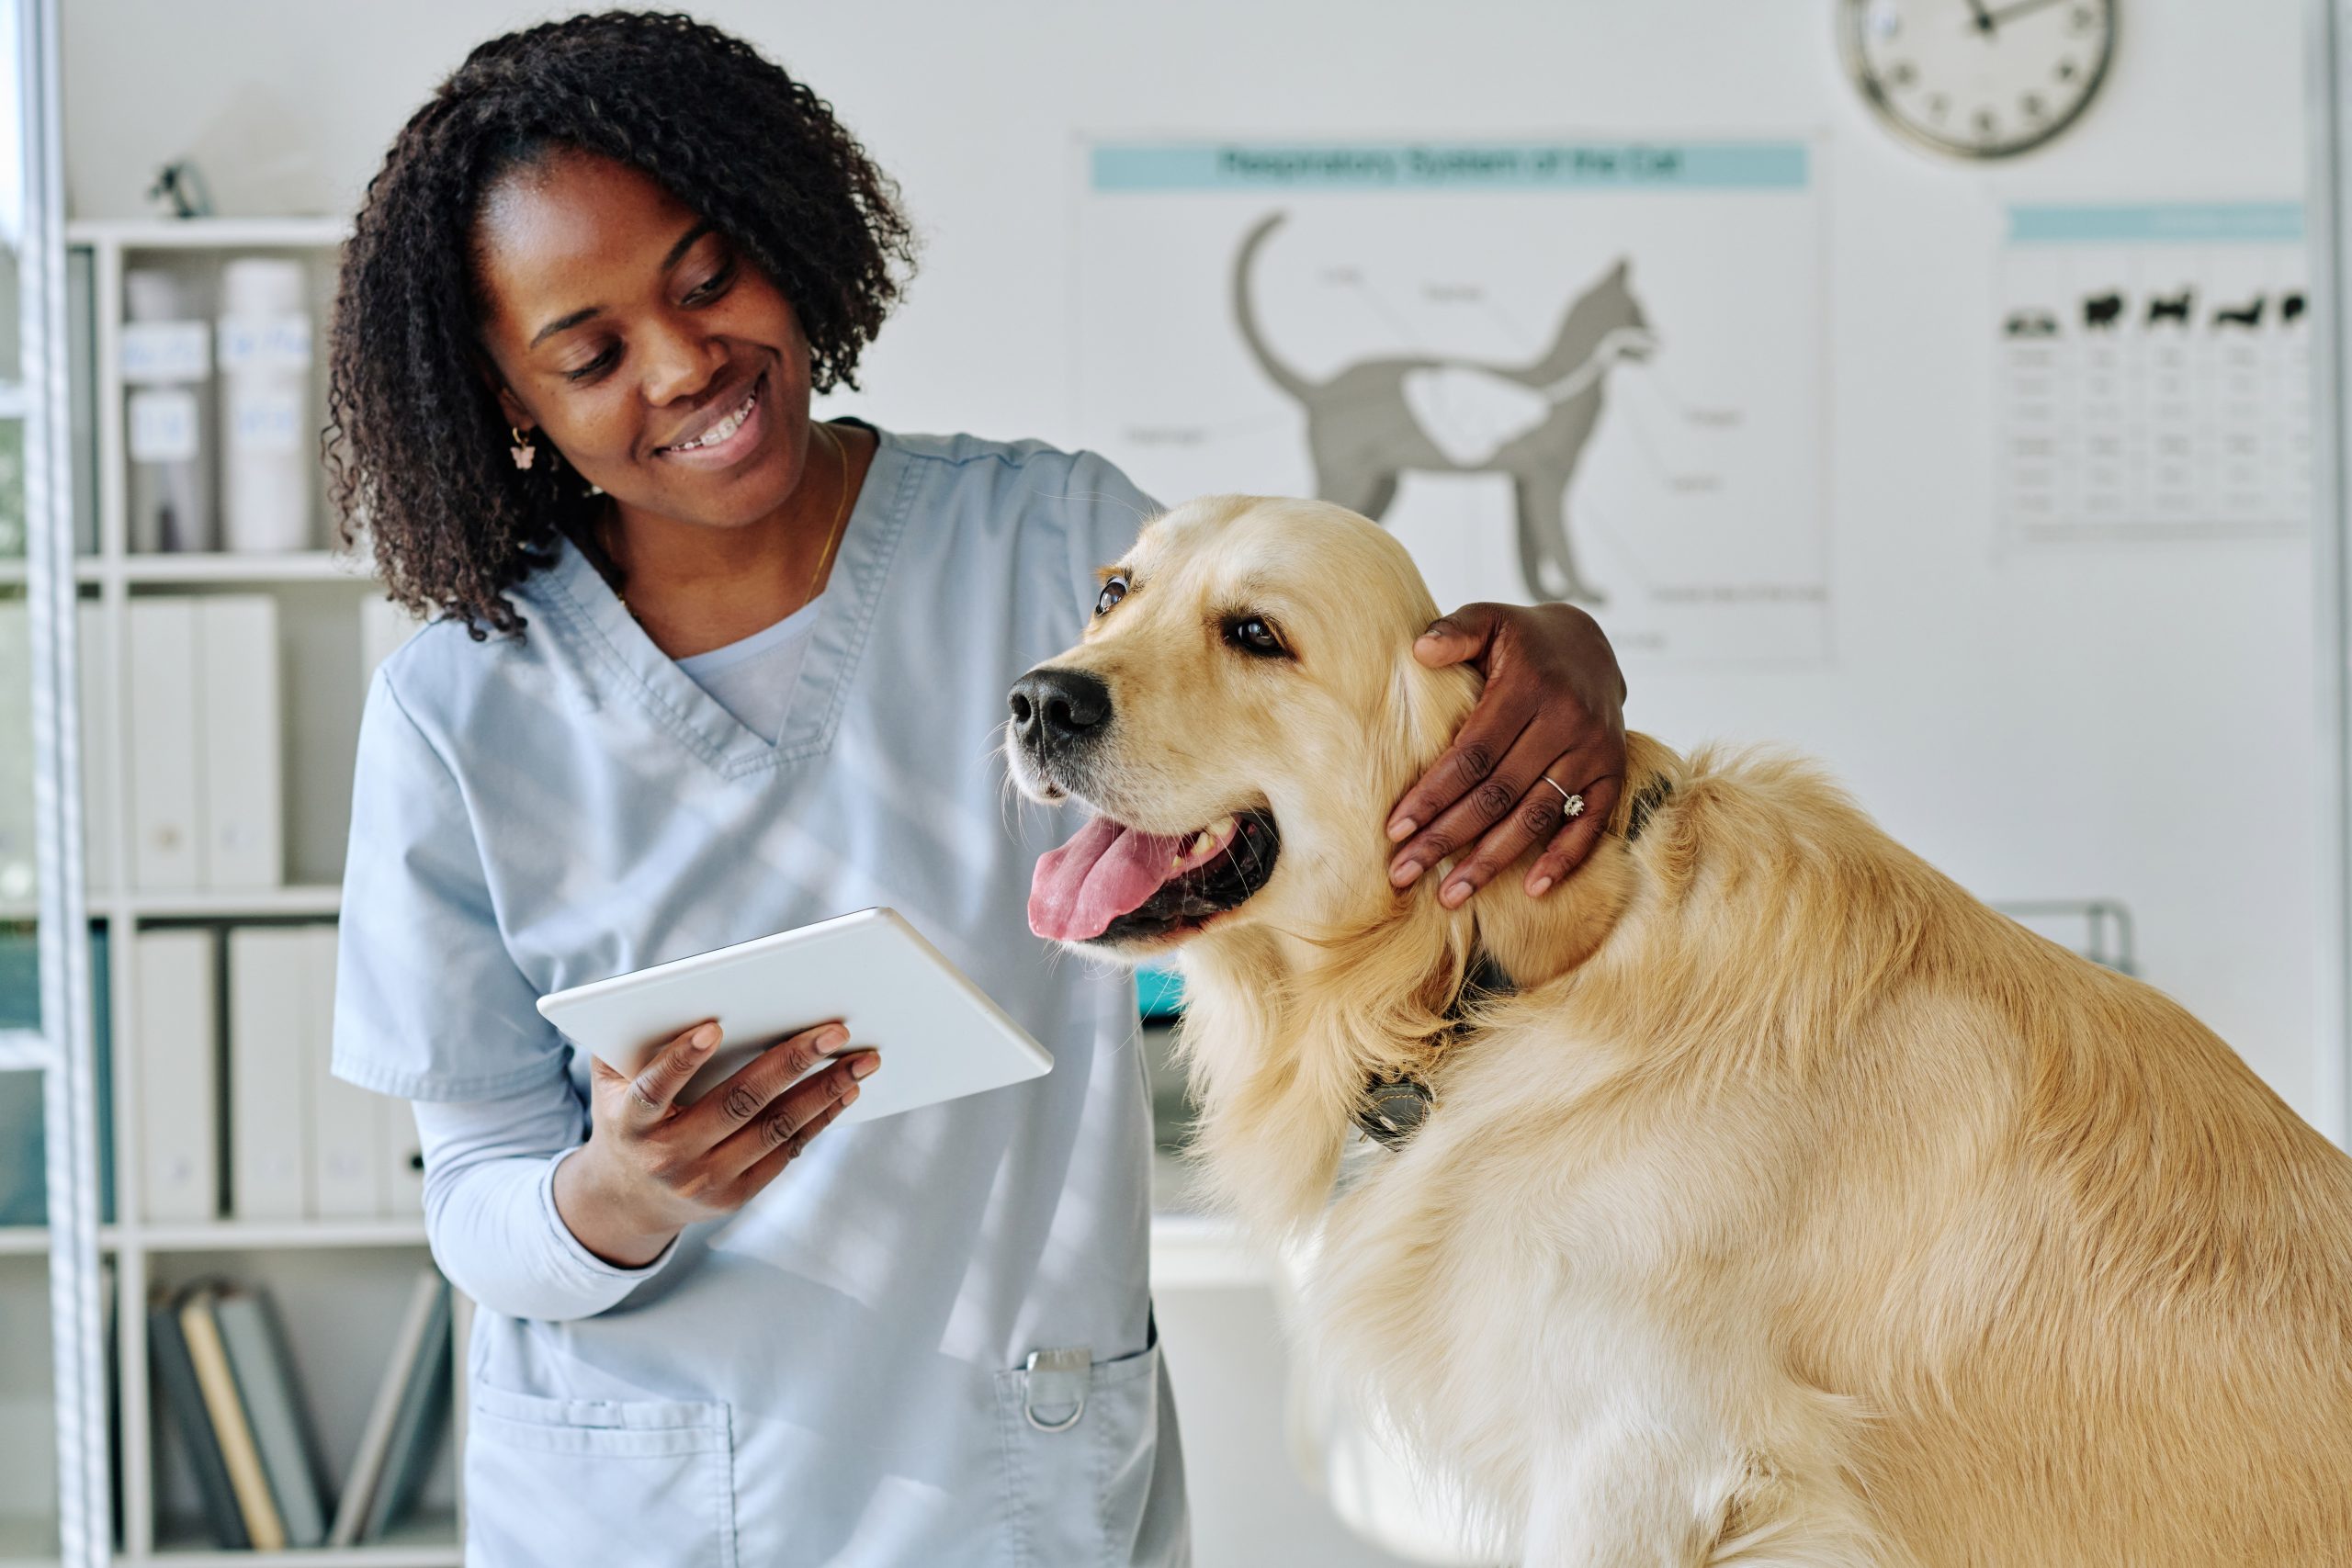 RCVS Academy helping veterinary nurses return to practice